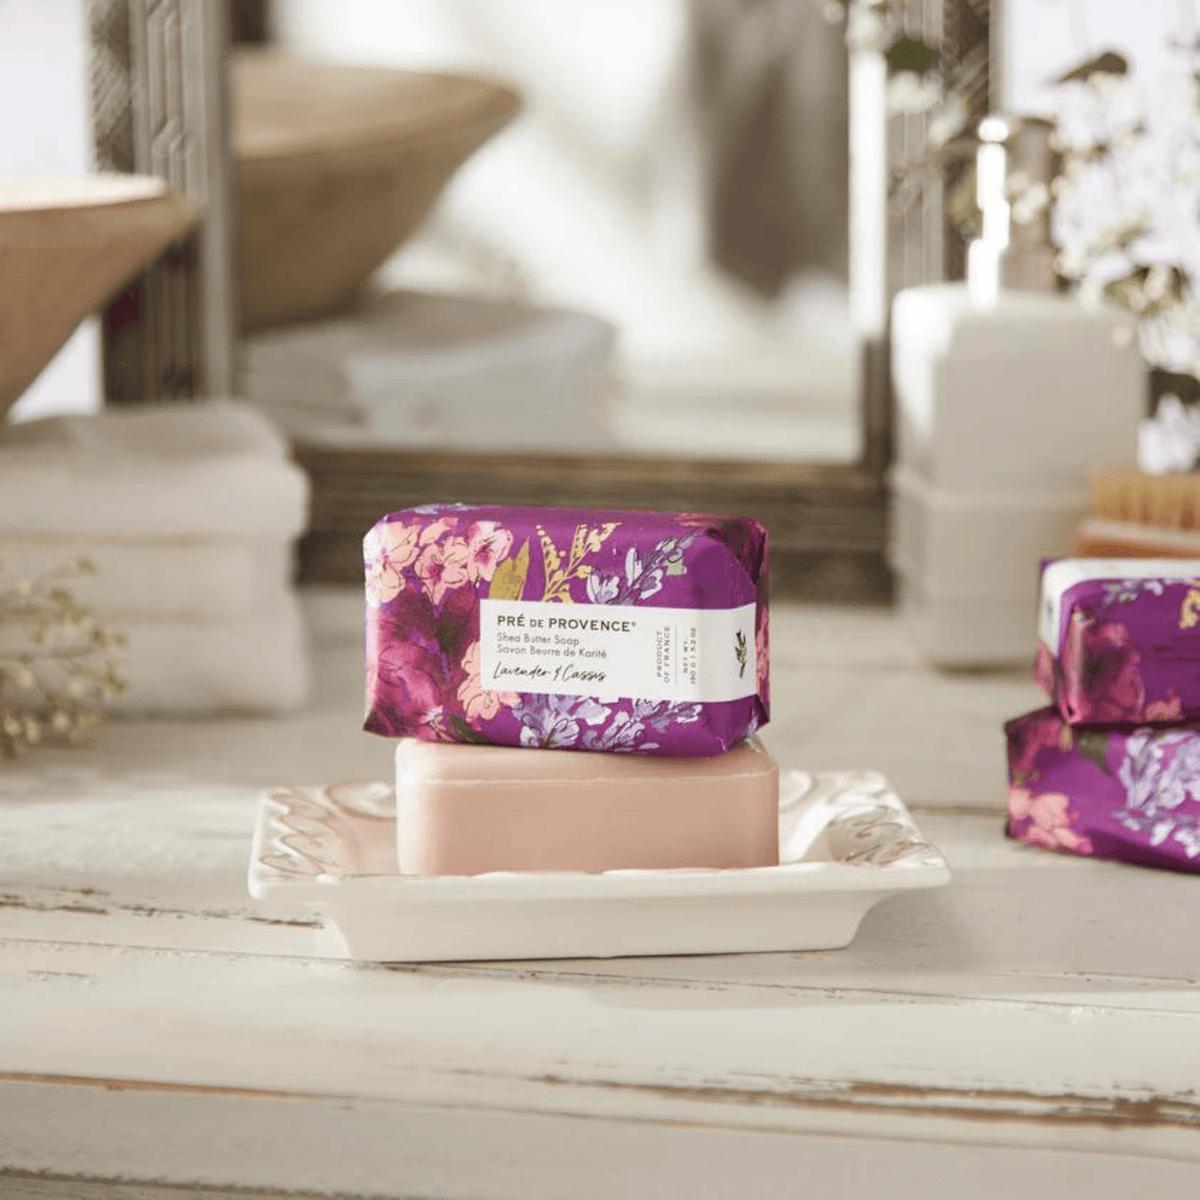 Alternate Image of Lavender & Cassis Soap